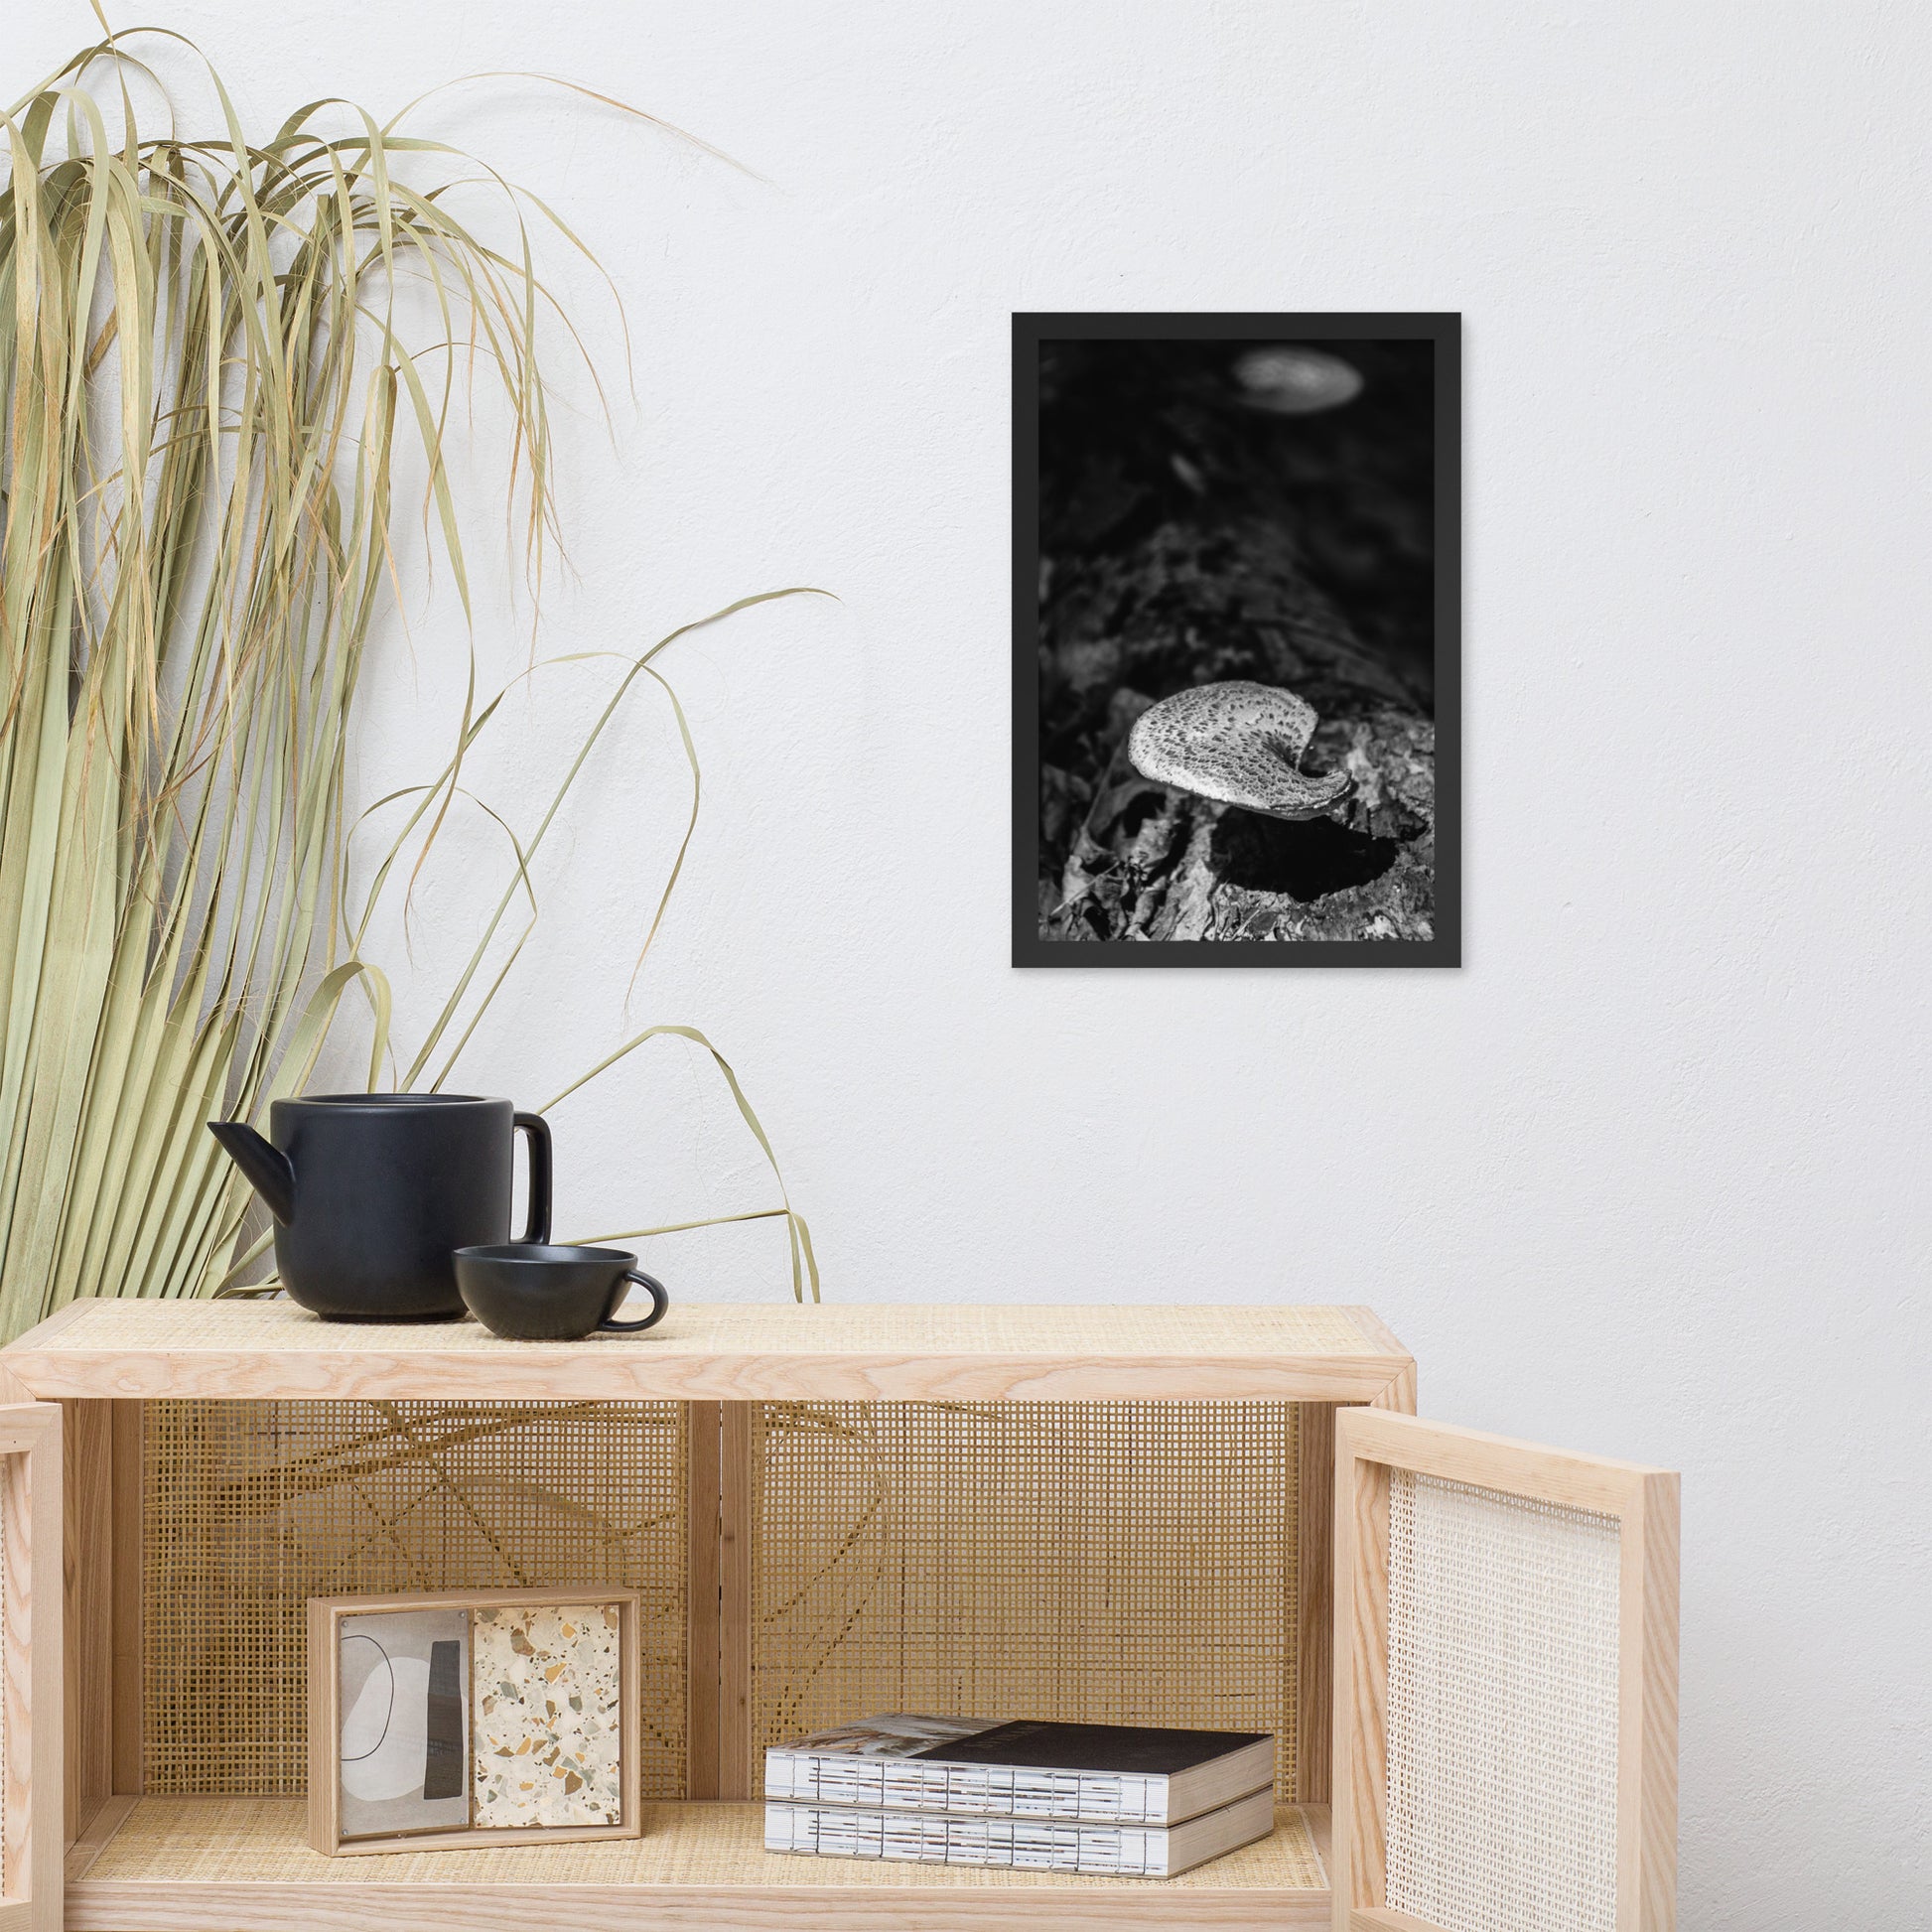 Rustic Farmhouse Art: Mushroom on Log in Black and White Botanical Nature Photo Framed Wall Art Print